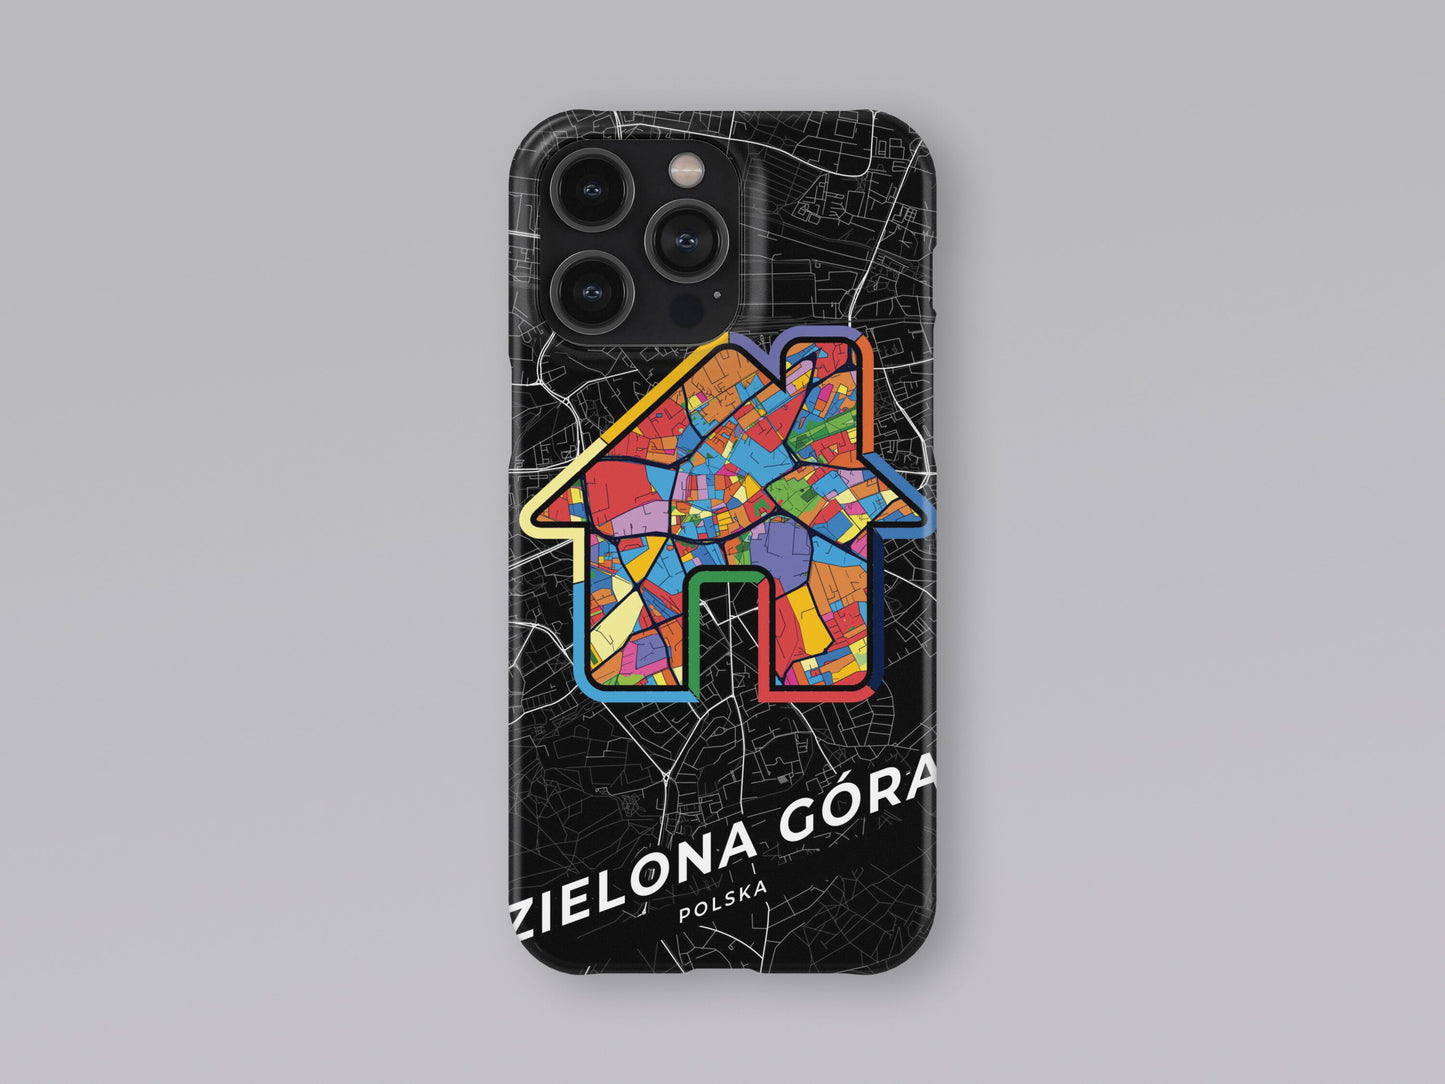 Zielona Góra Poland slim phone case with colorful icon 3